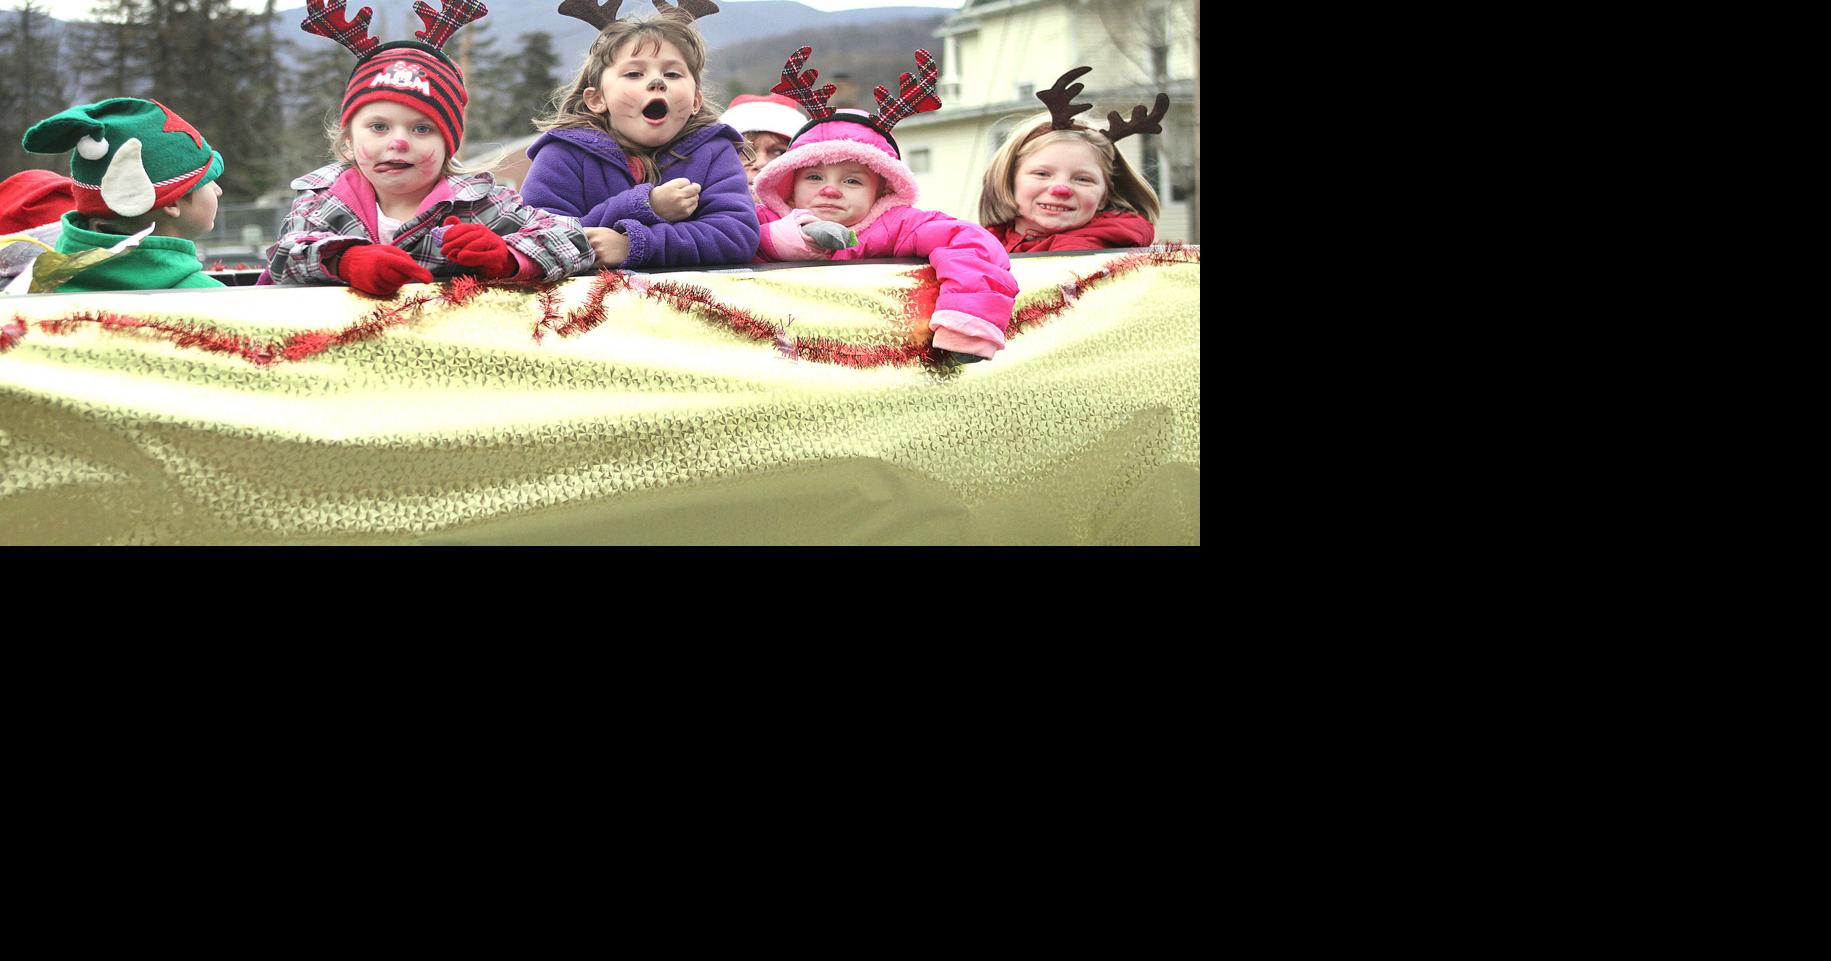 Christmas parade coming to Roanoke County